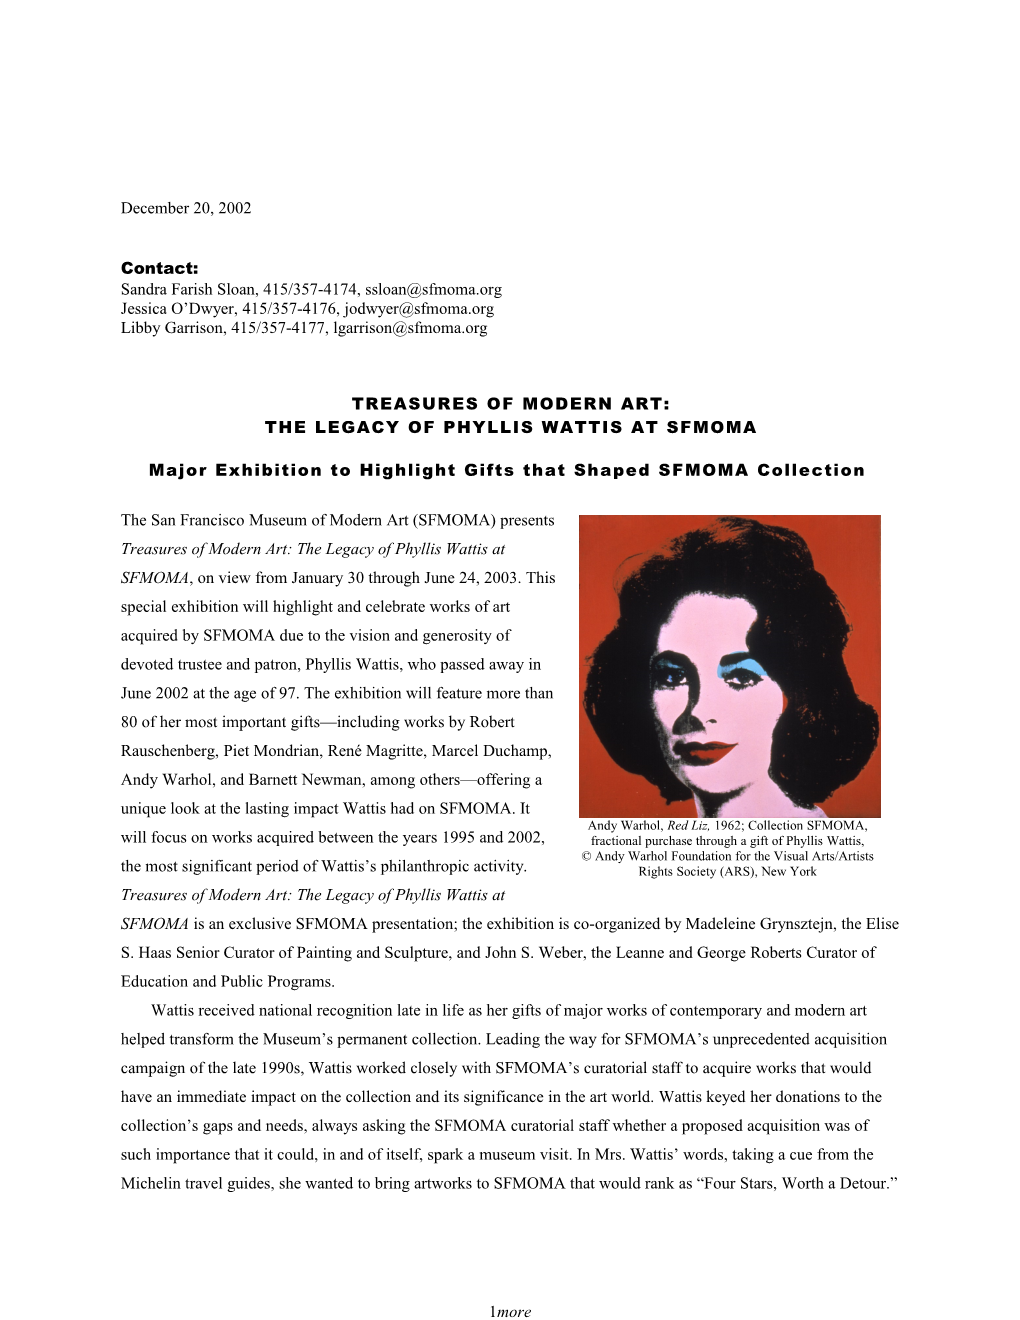 SFMOMA Press Room Press Release: Treasures of Modern Art: the Legacy of Phyllis Wattis